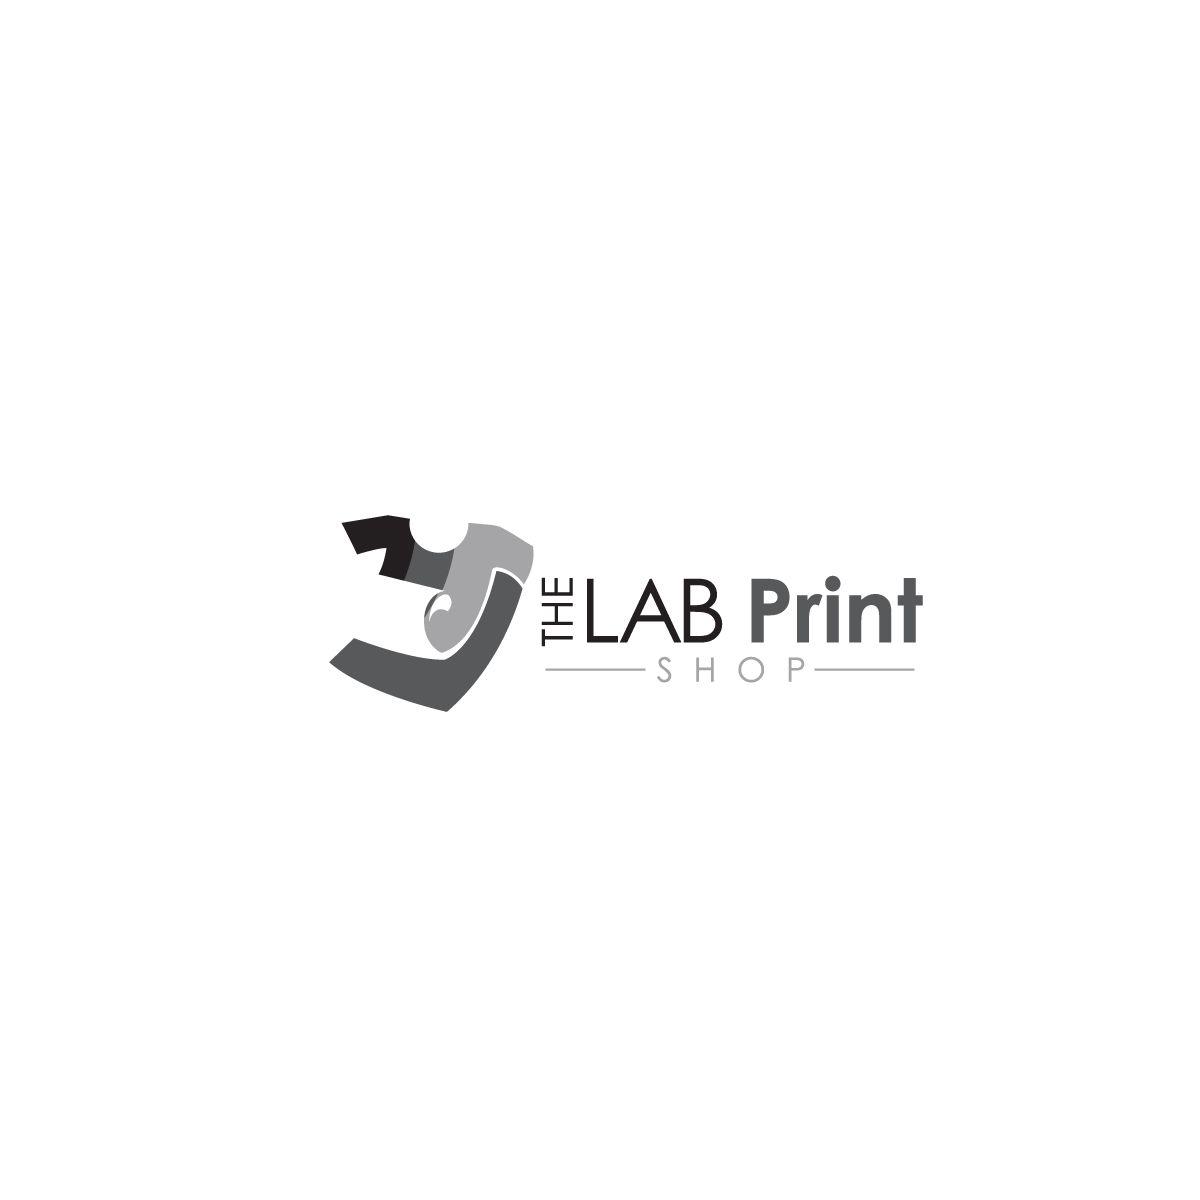 Print Shop Logo - Modern, Upmarket, Screen Printing Logo Design for The LAB Print Shop ...